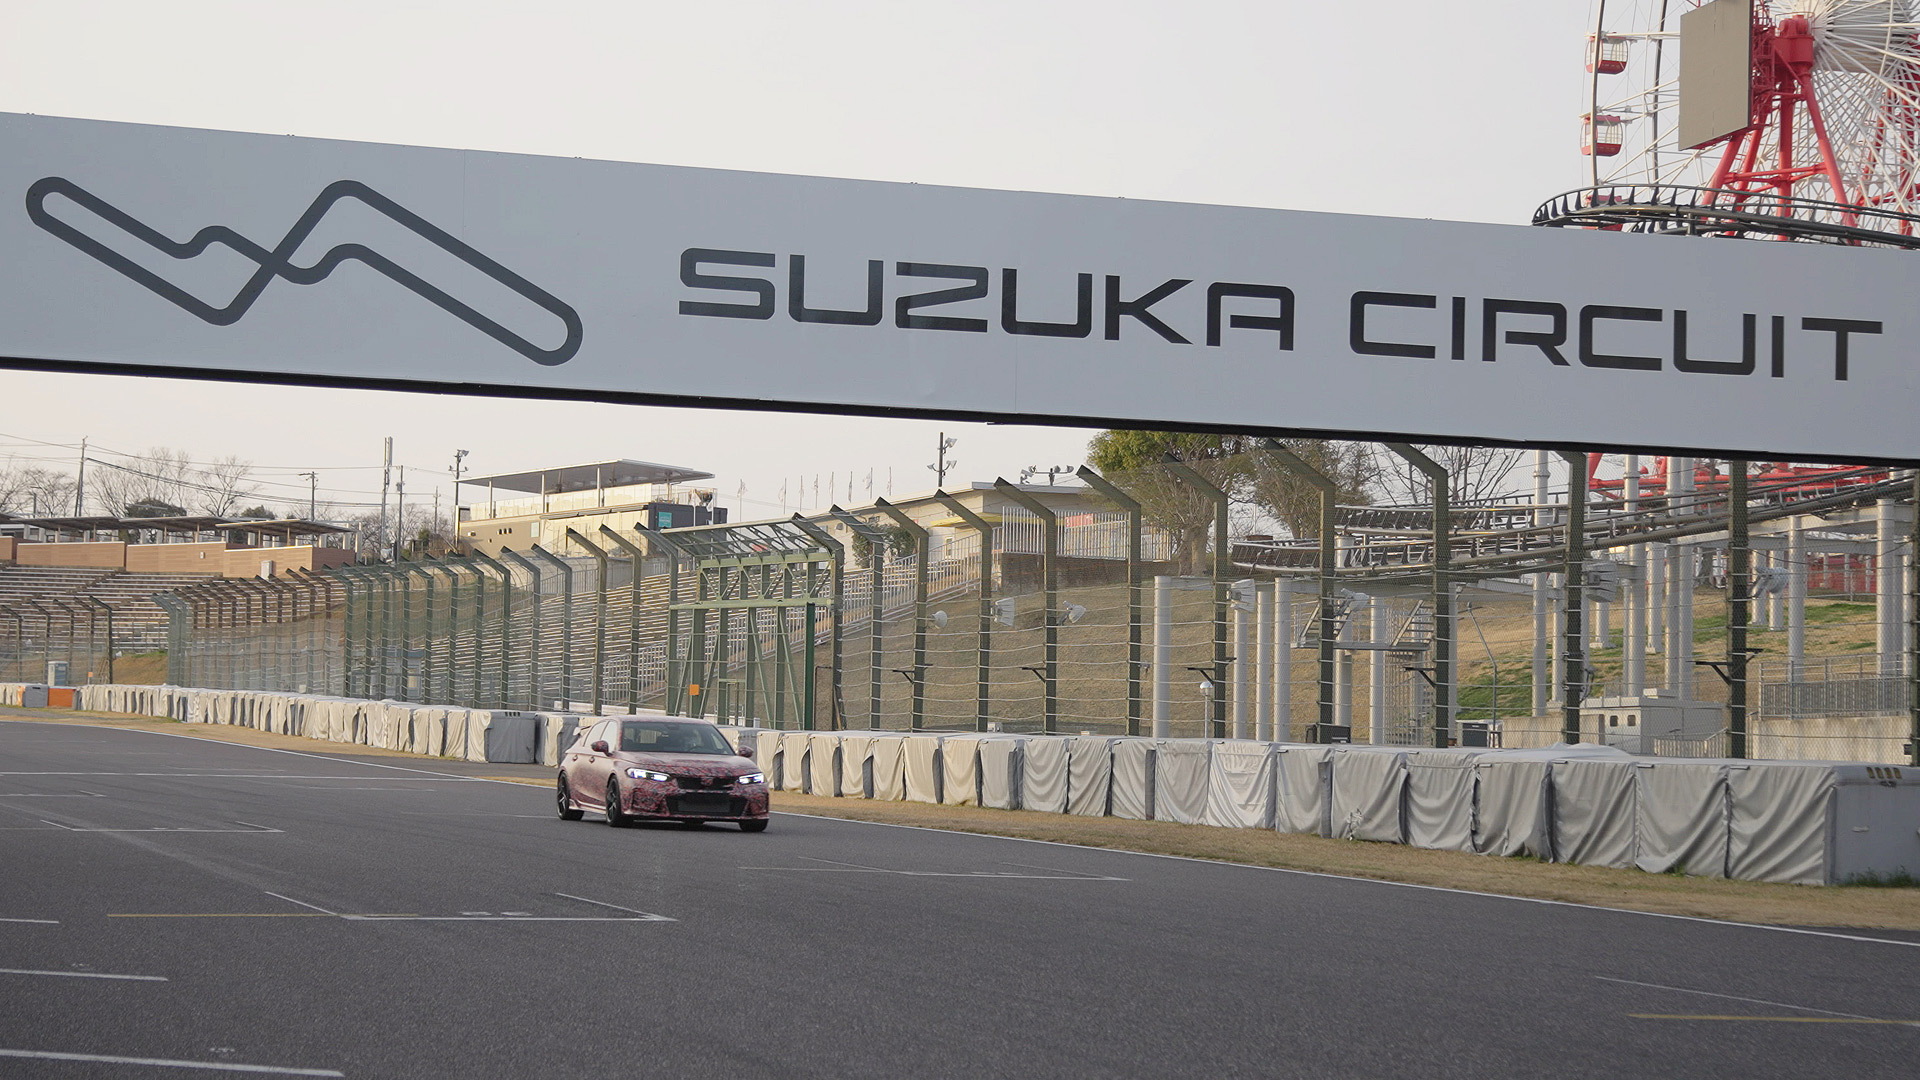 2023 Honda Civic Type R prototype testing at Suzuka International Racing Course